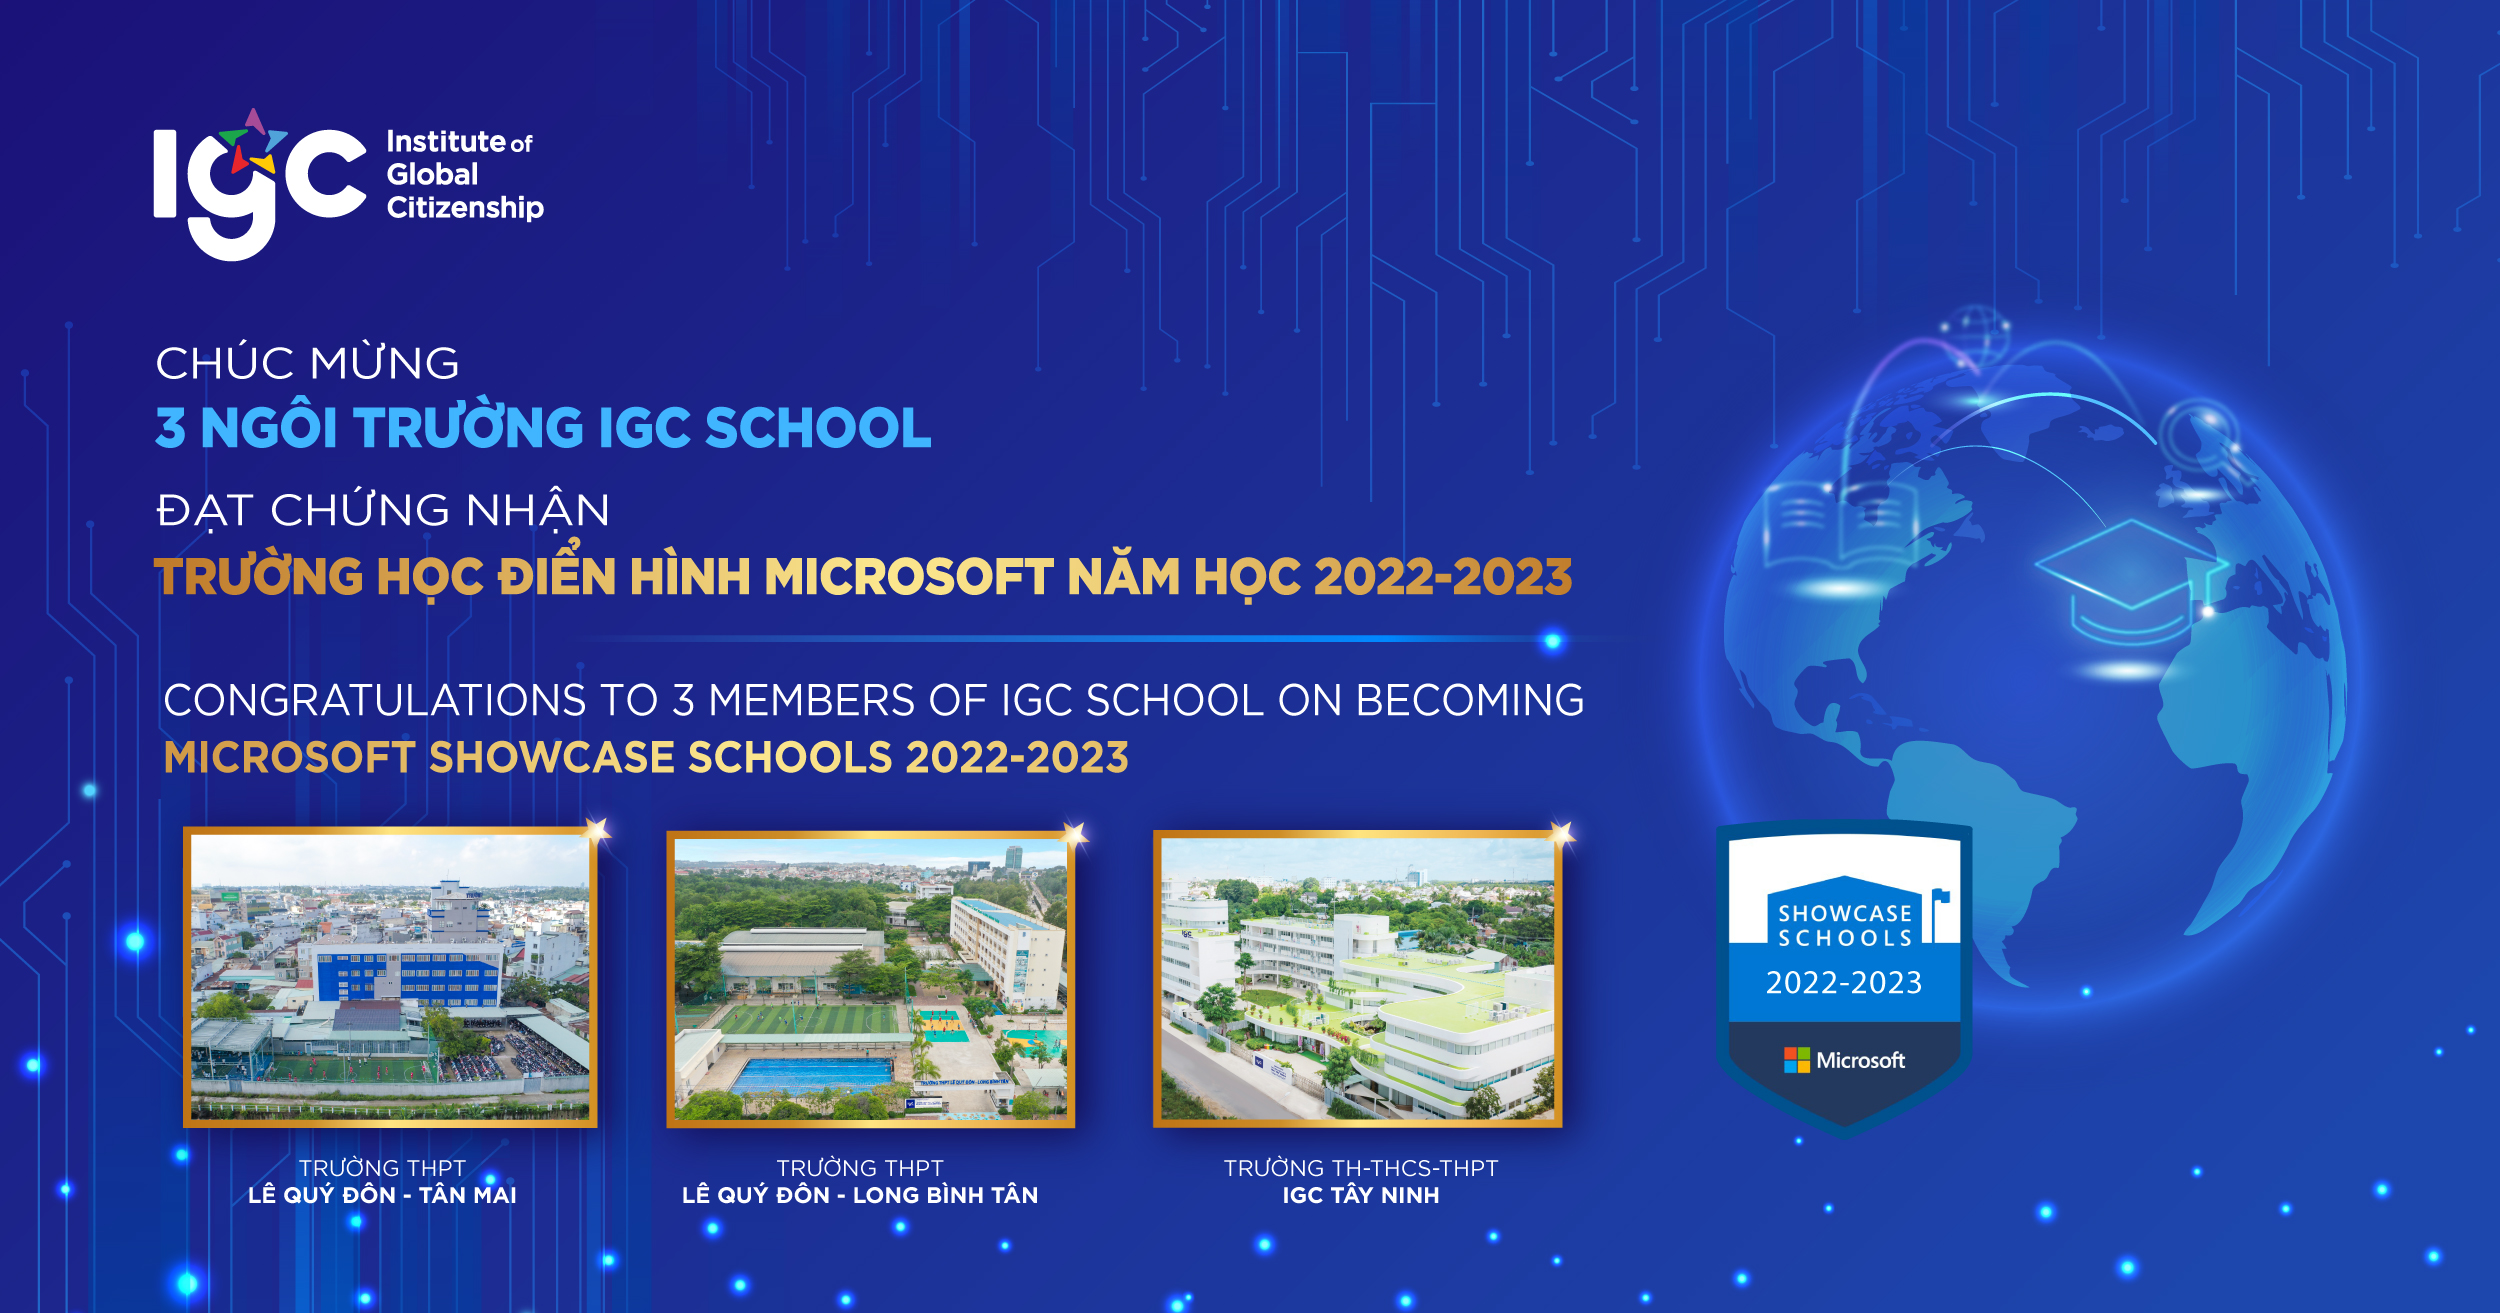 Microsoft Showcase Schools 2022-2023